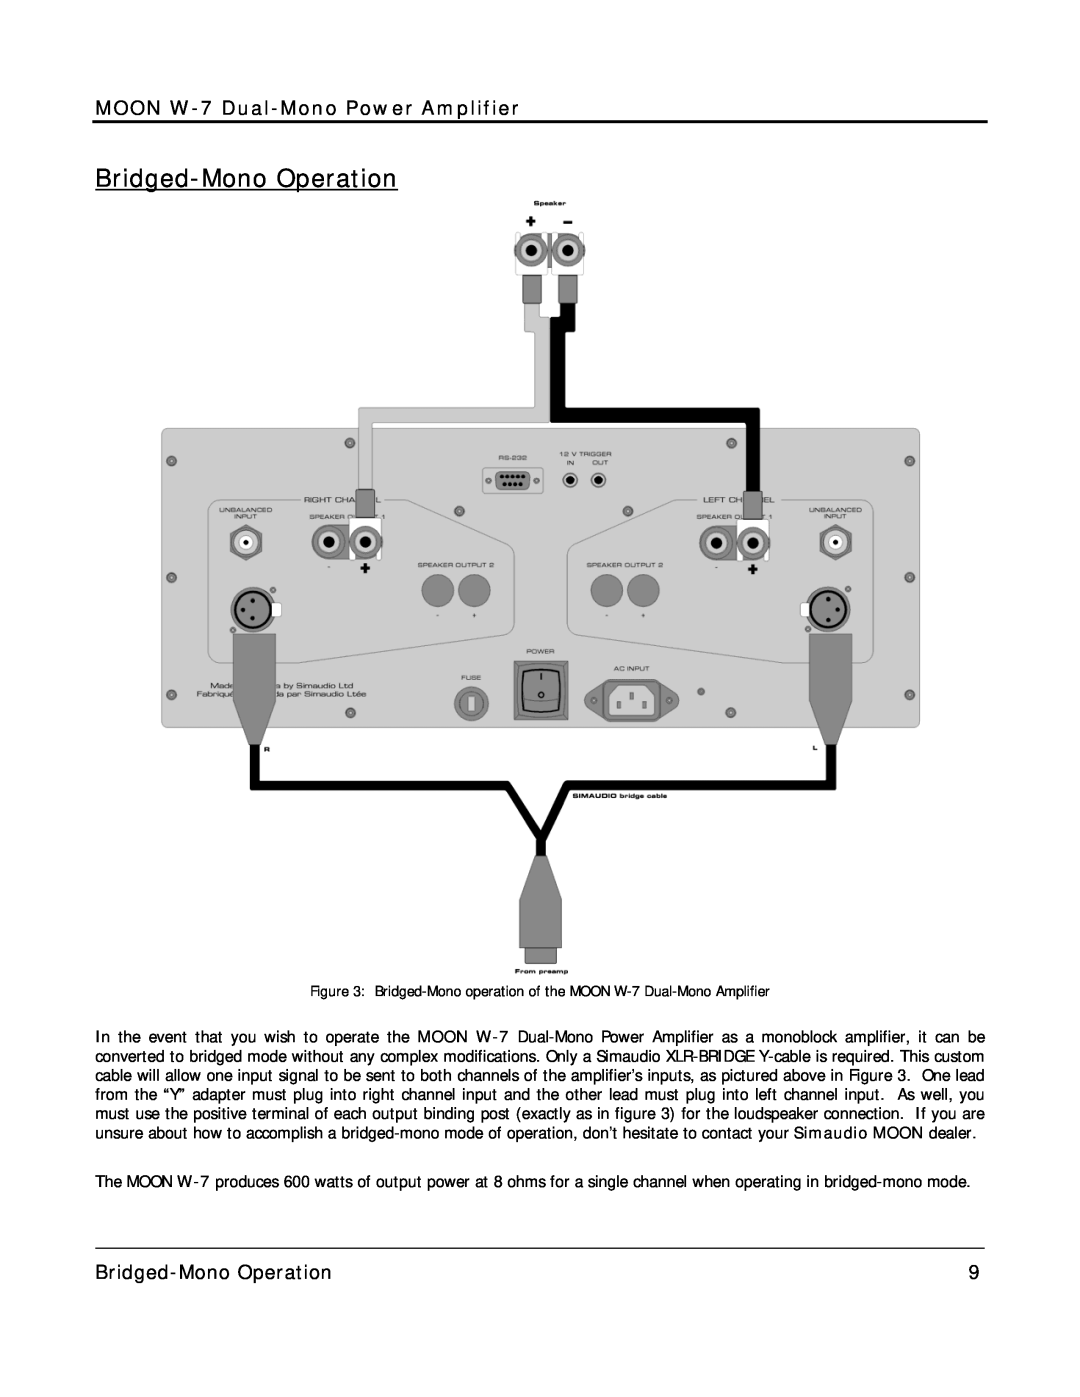 Simaudio owner manual Bridged-MonoOperation, MOON W-7 Dual-MonoPower Amplifier 